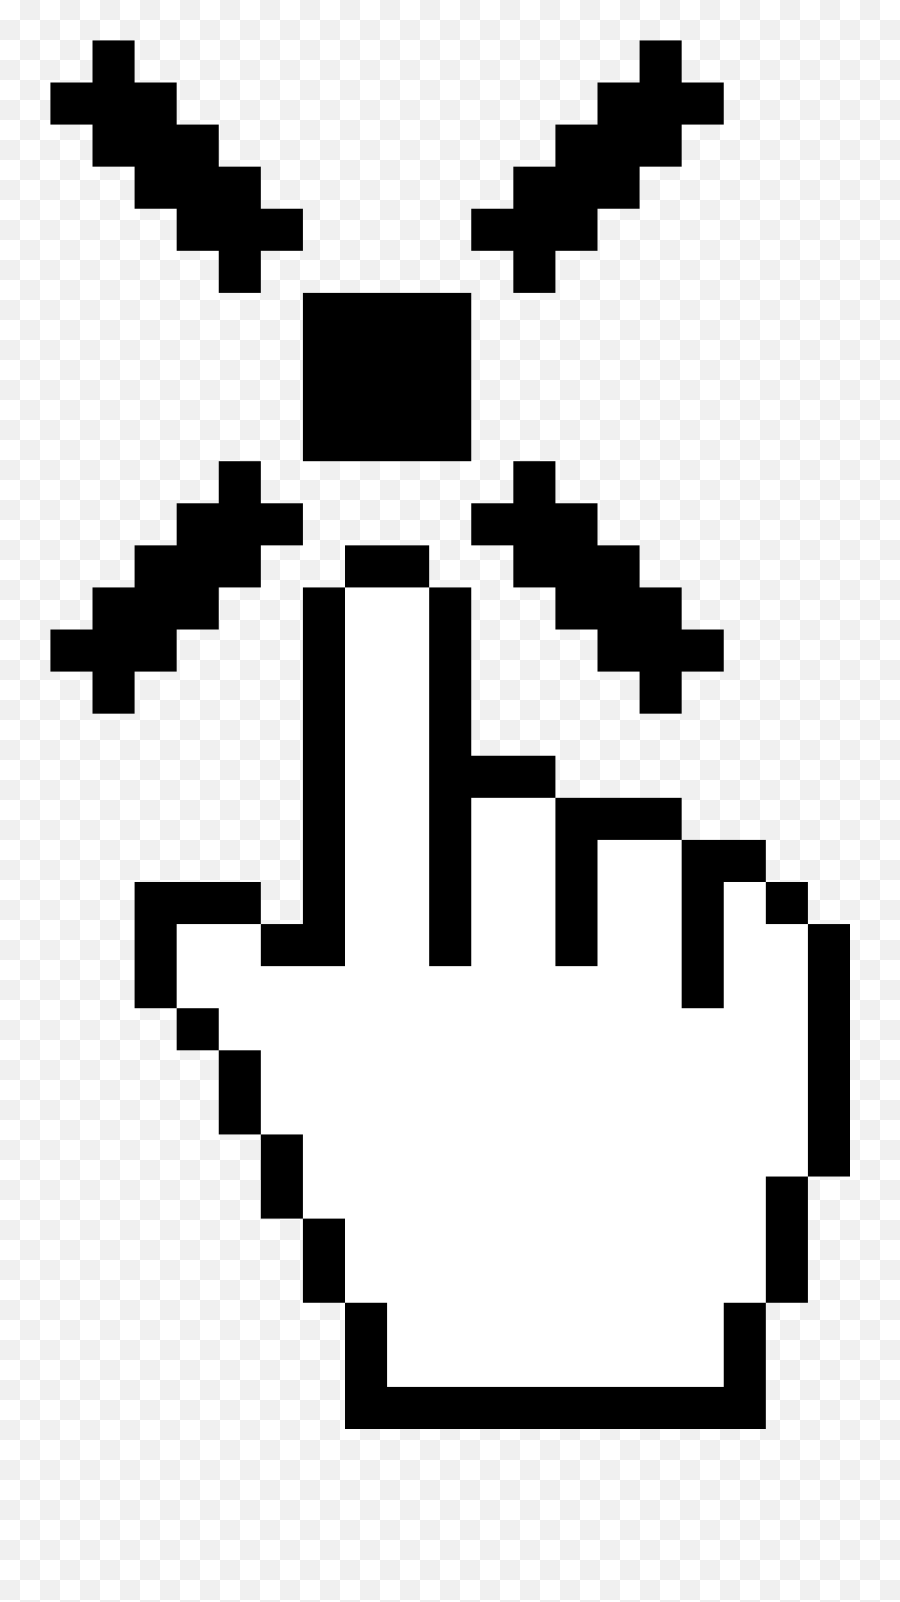 Pixel Art Gallery - Pixel Mouse Pointer Emoji,Hitmarker Emoticon